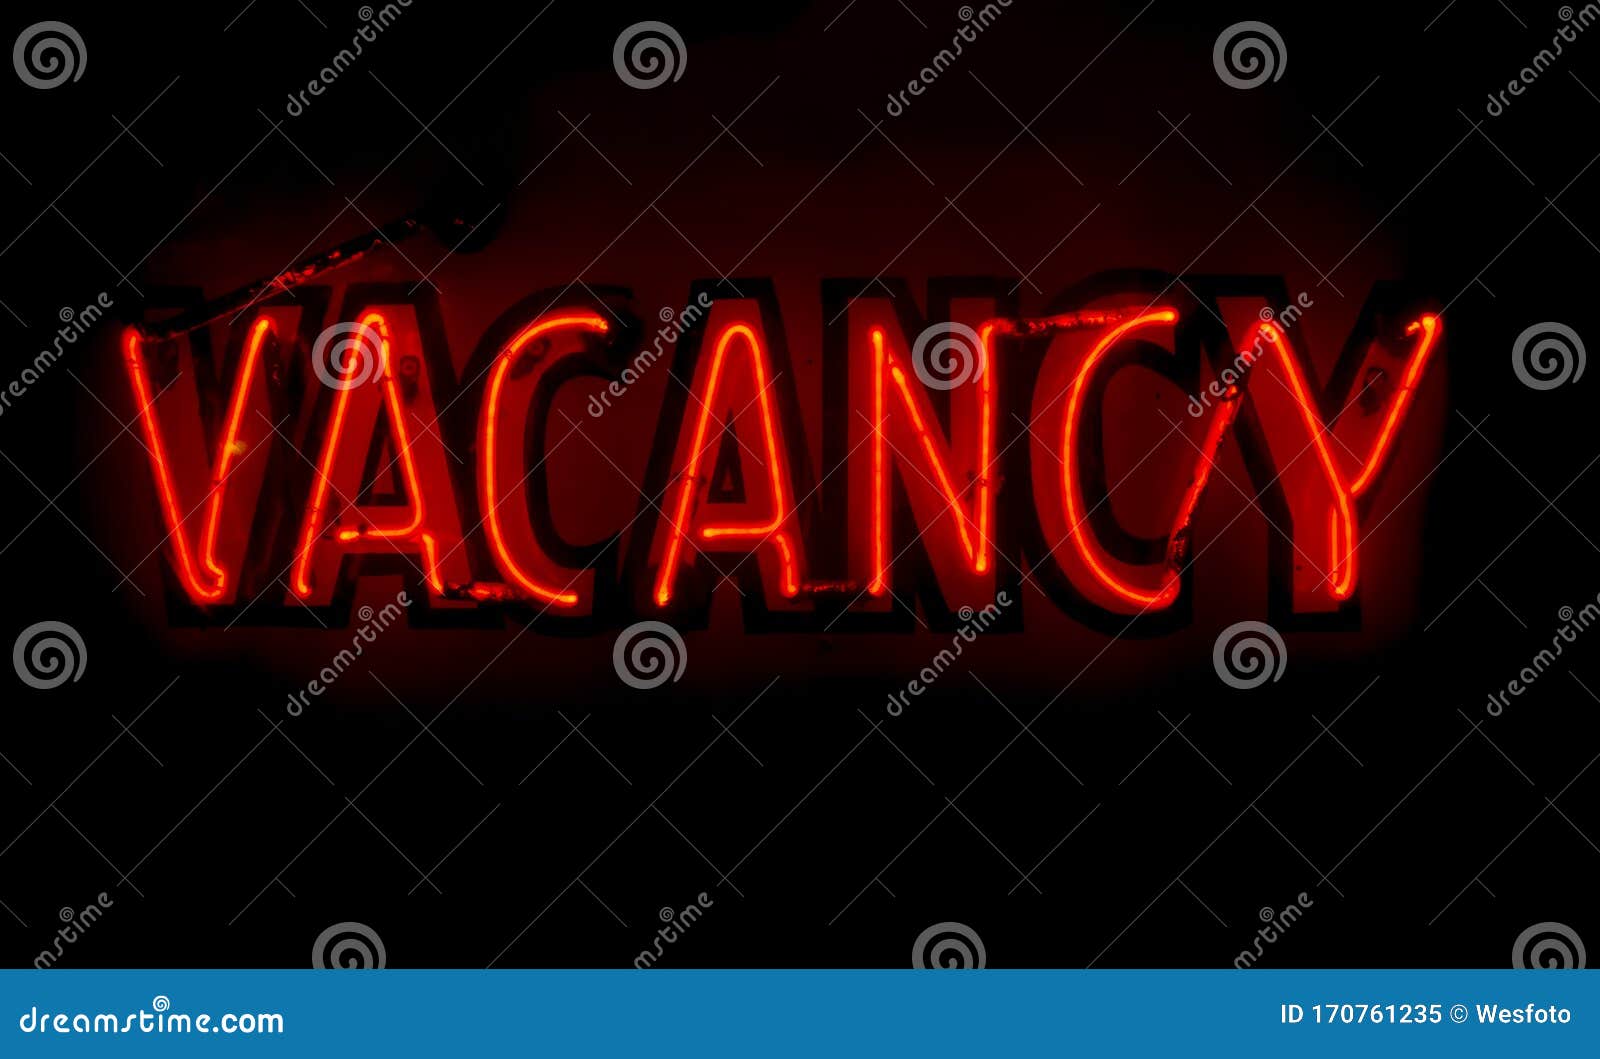 neon vacancy sign in red